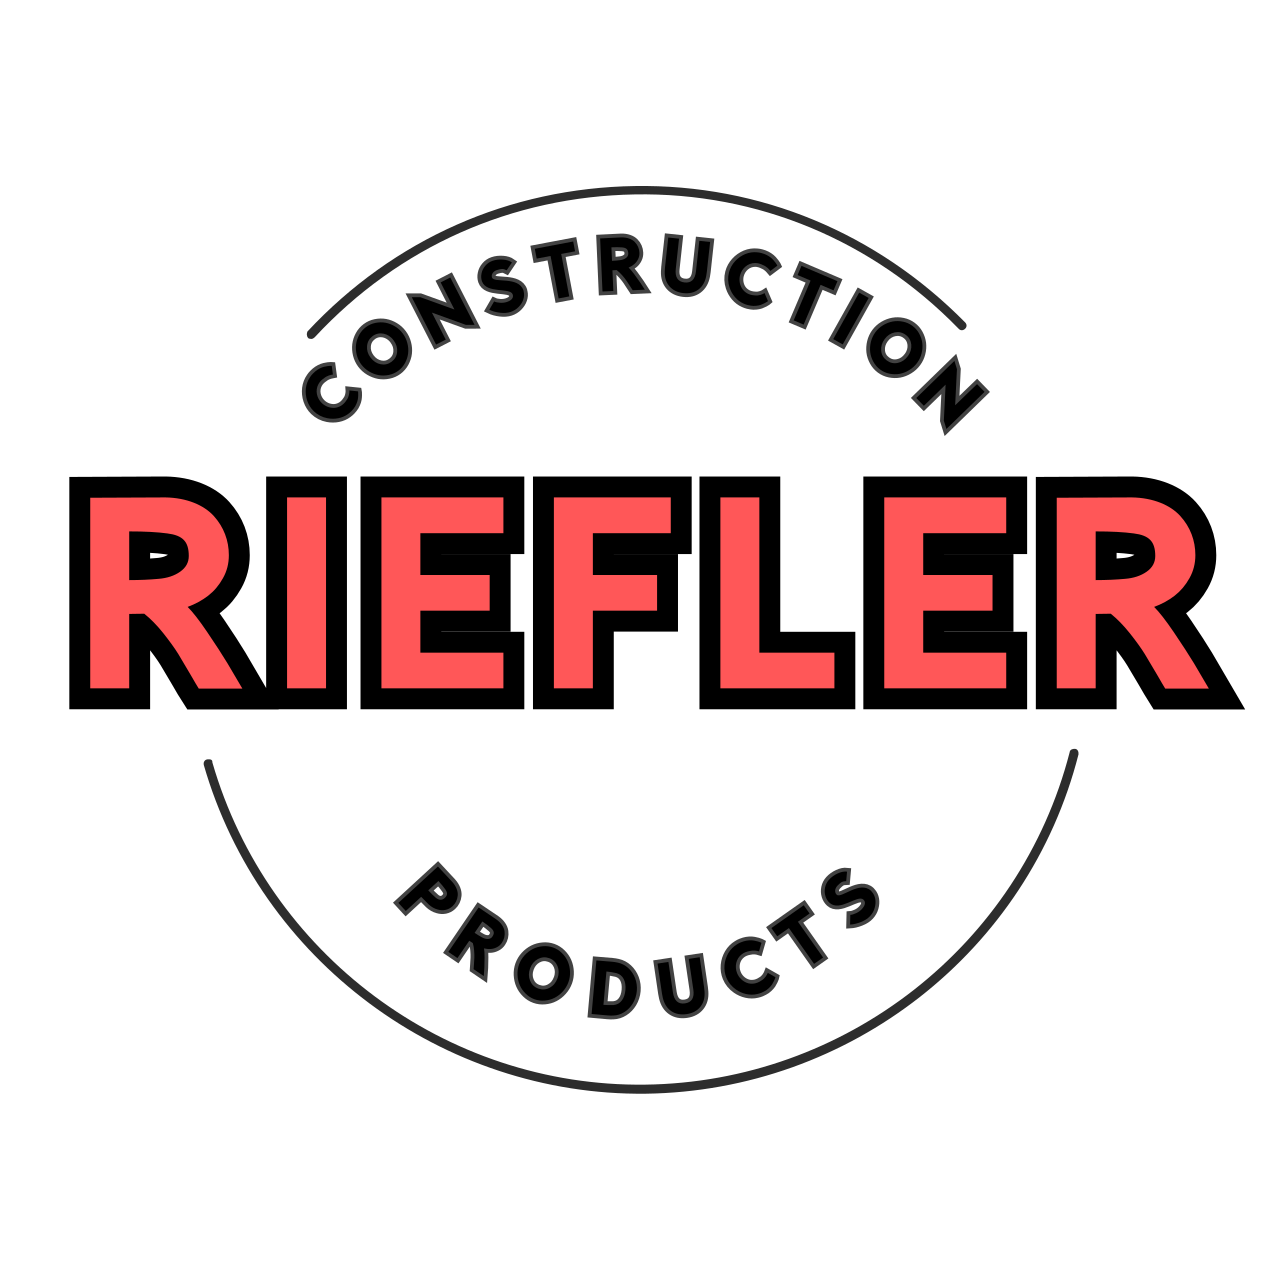 RIEFLER 's web page